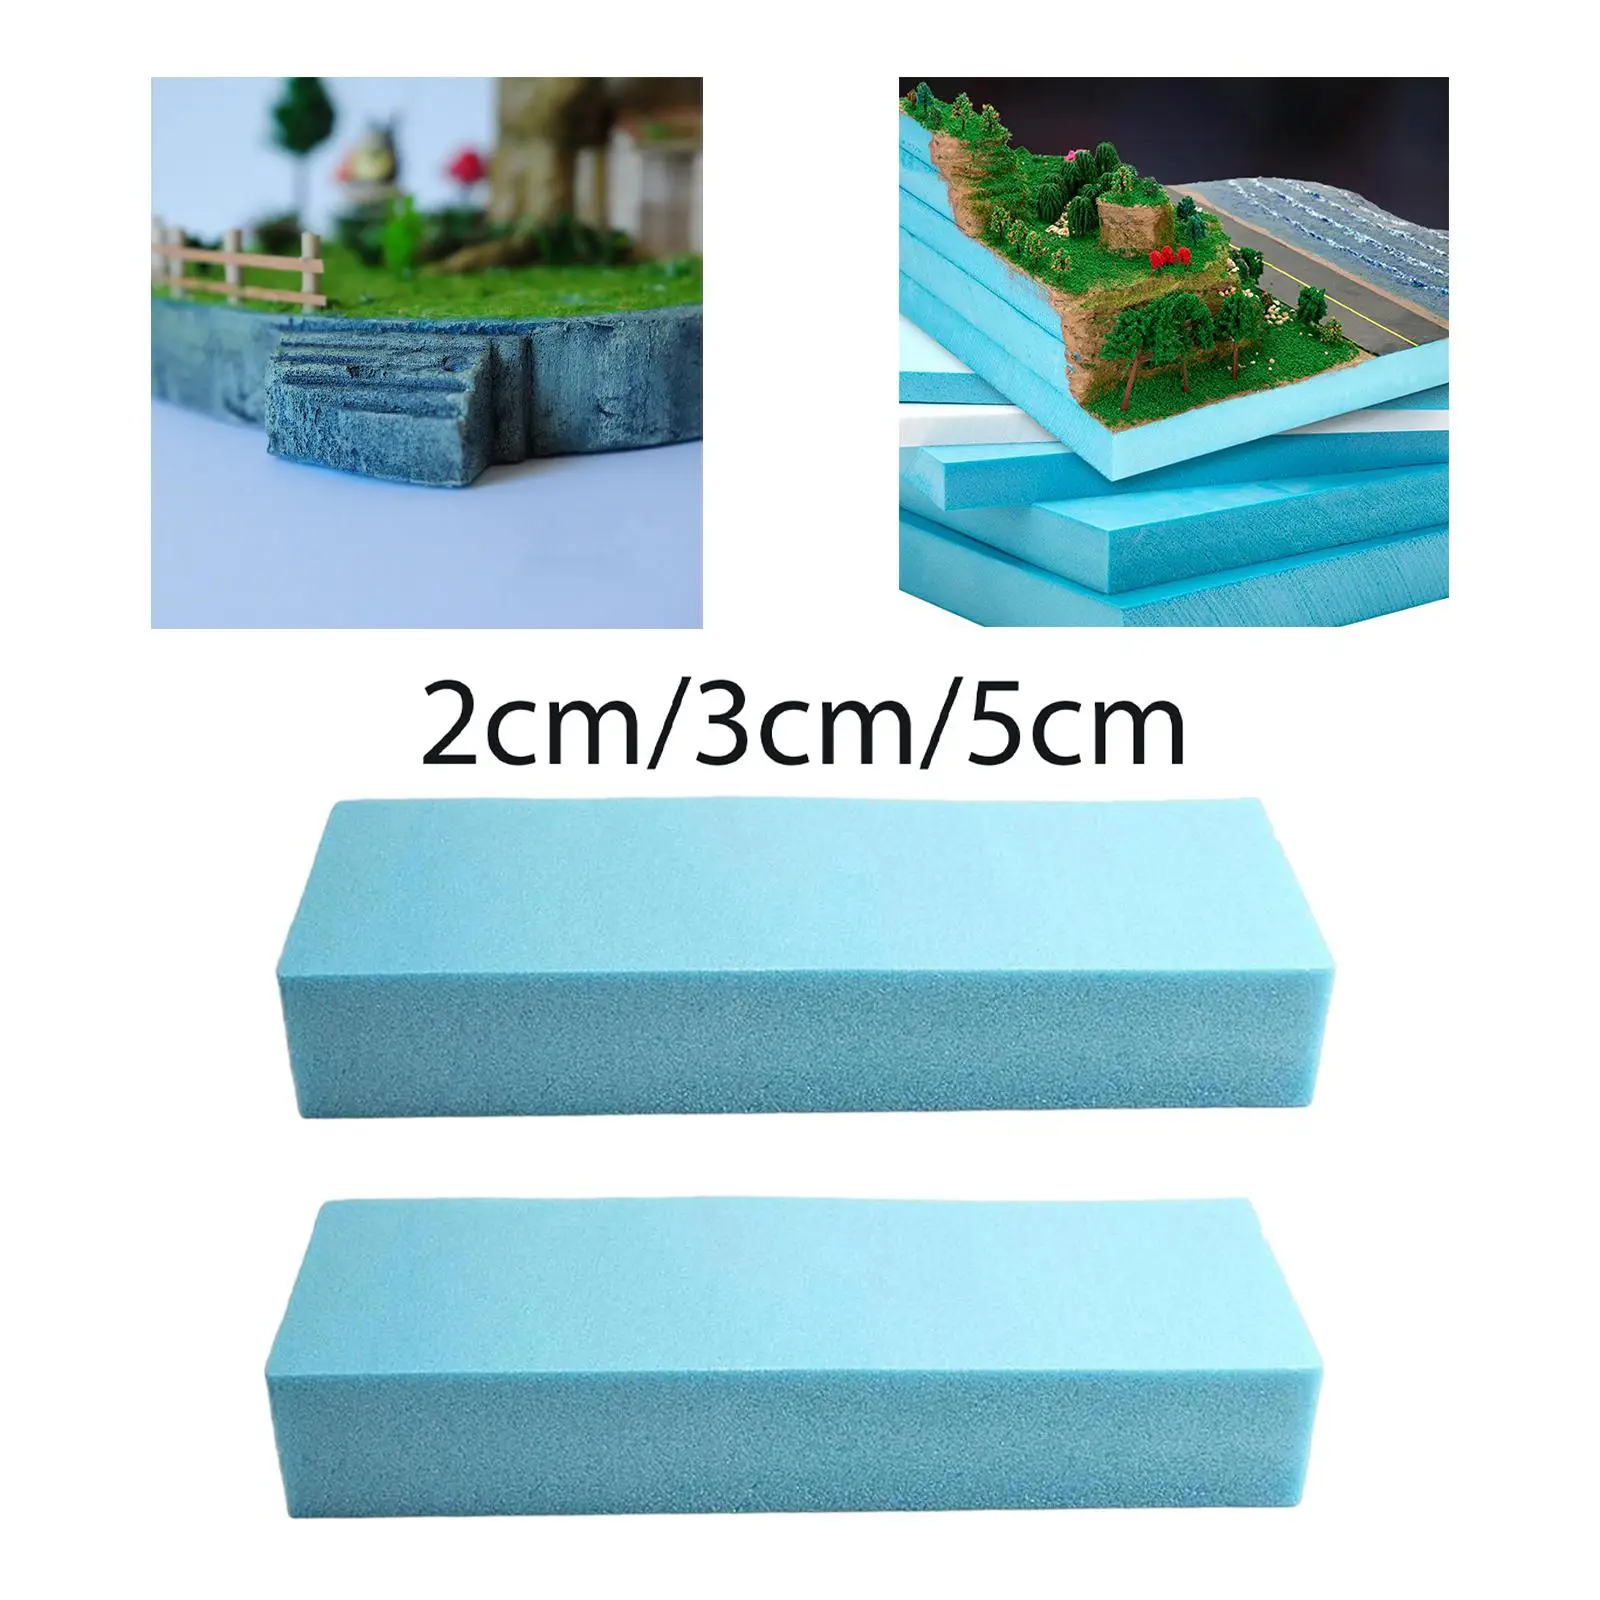 2 Pieces Craft Board Foam DIY Landscape Scenery Building Polystyrene Sculpting Sheets Rectangular Blocks for Micro Landscape